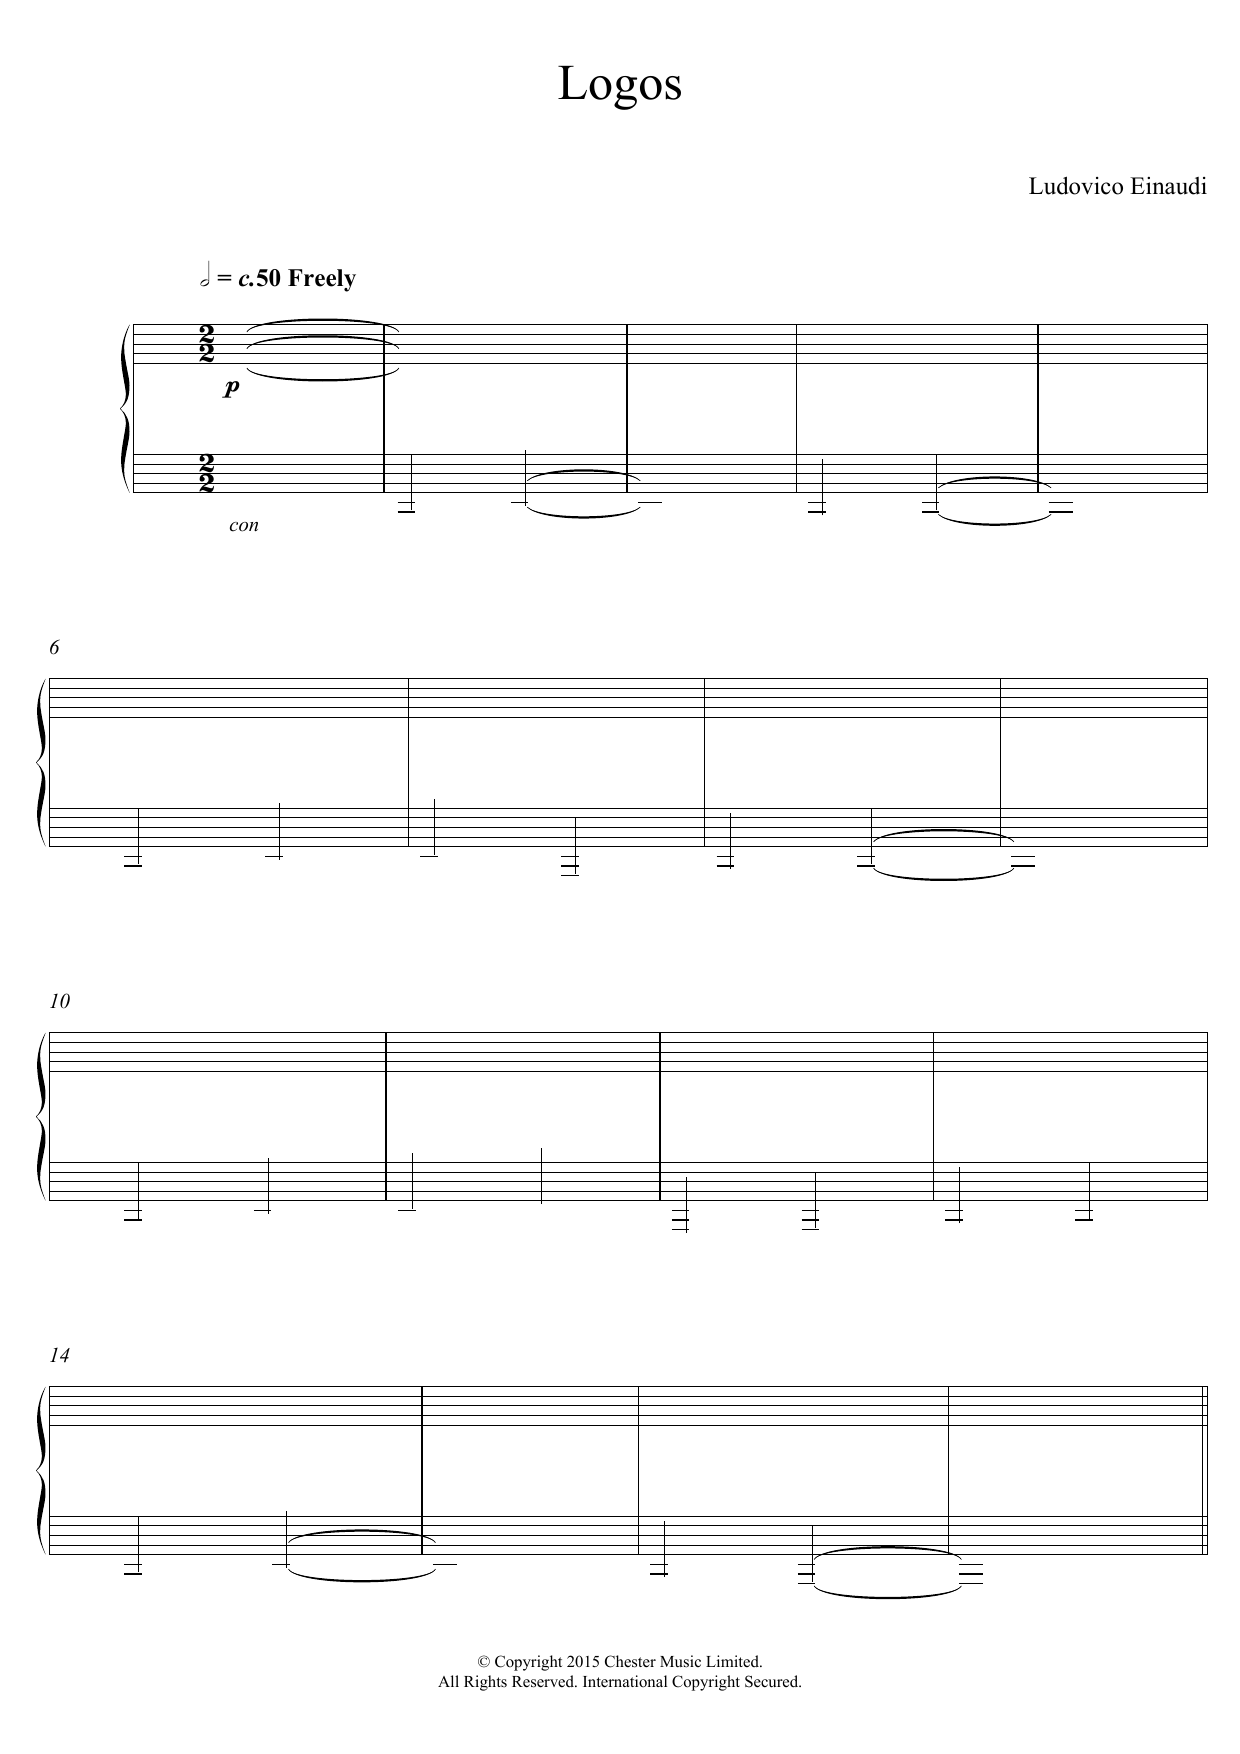 Ludovico Einaudi Logos Sheet Music Notes & Chords for Piano - Download or Print PDF